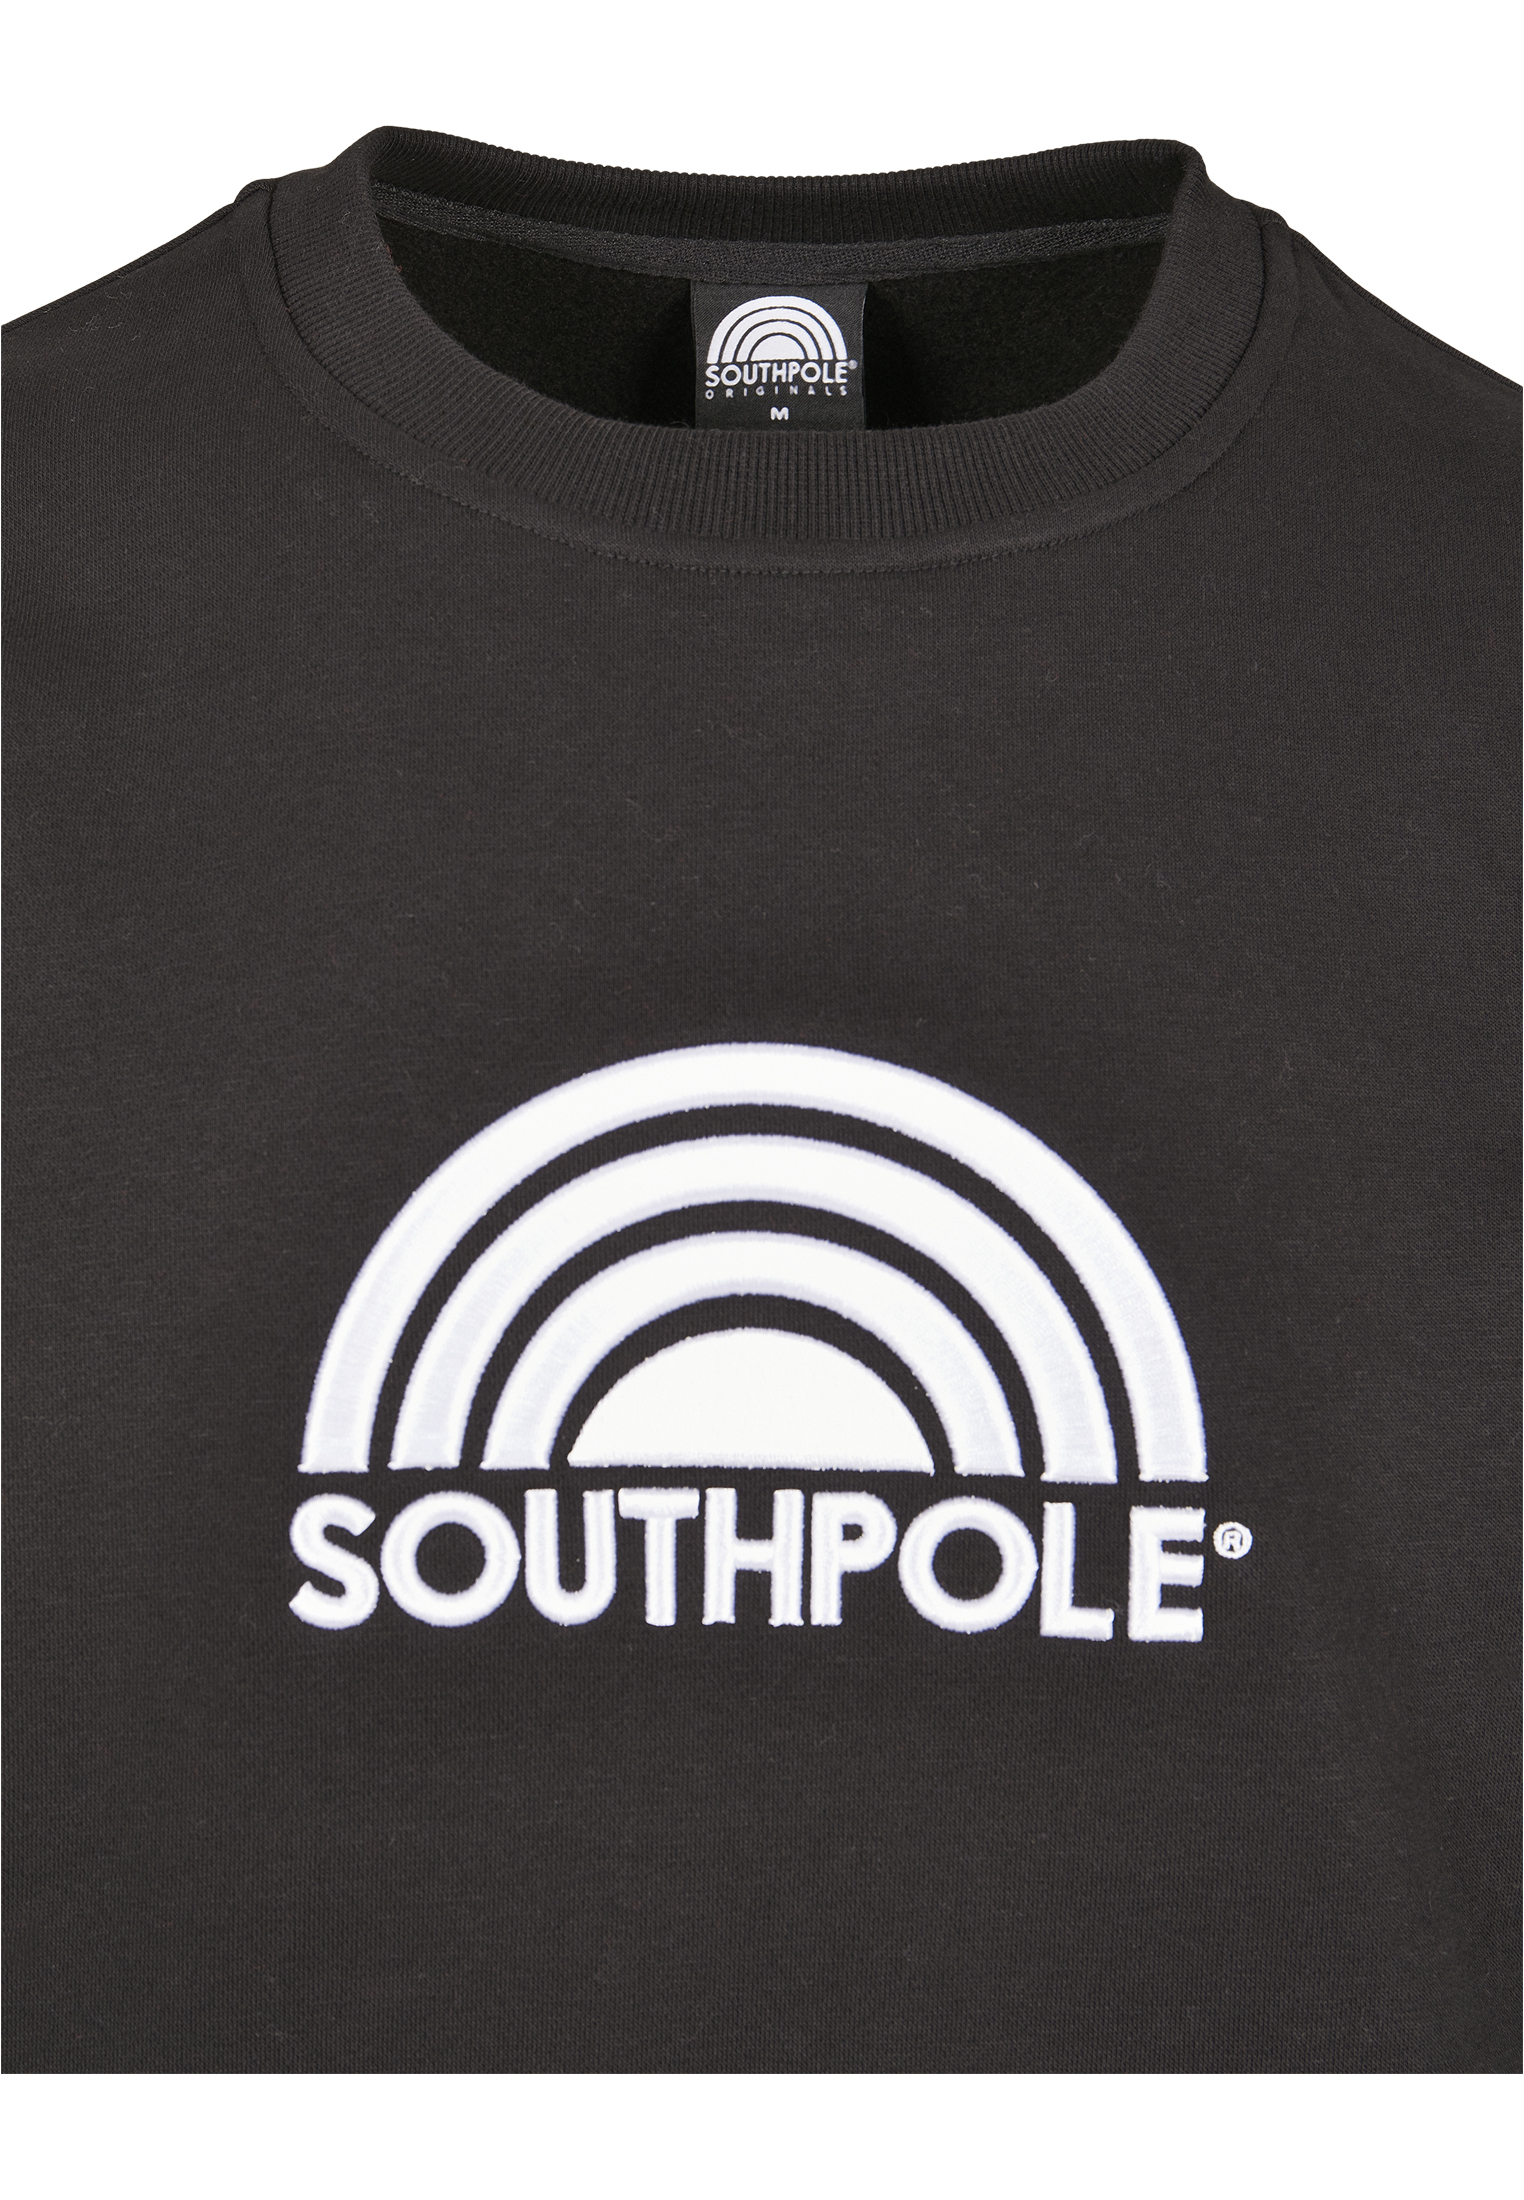 Saisonware Southpole 3D Crewneck in Farbe black